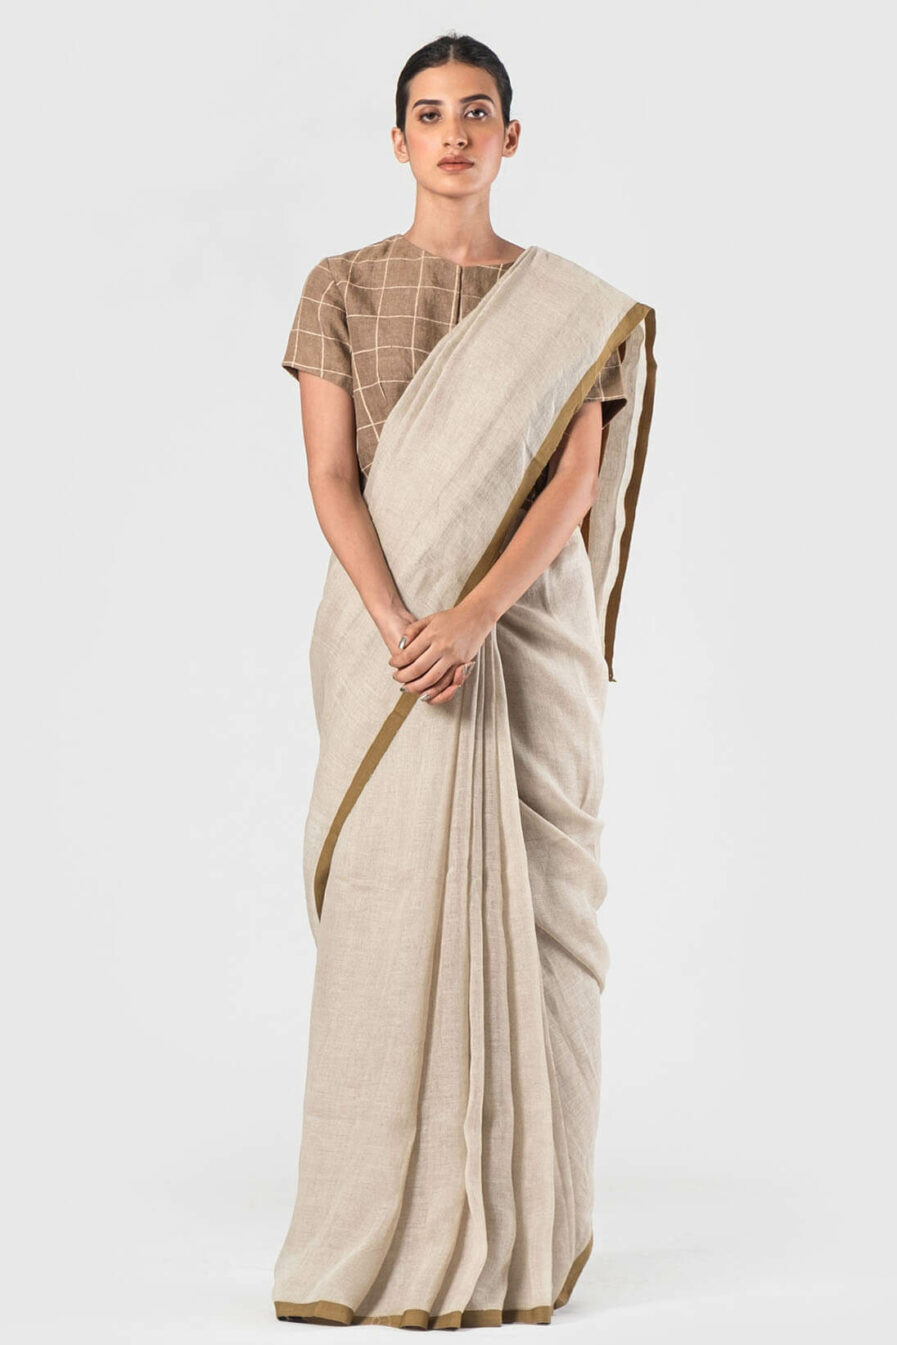 Anavila Natural Contrast selvedge sari